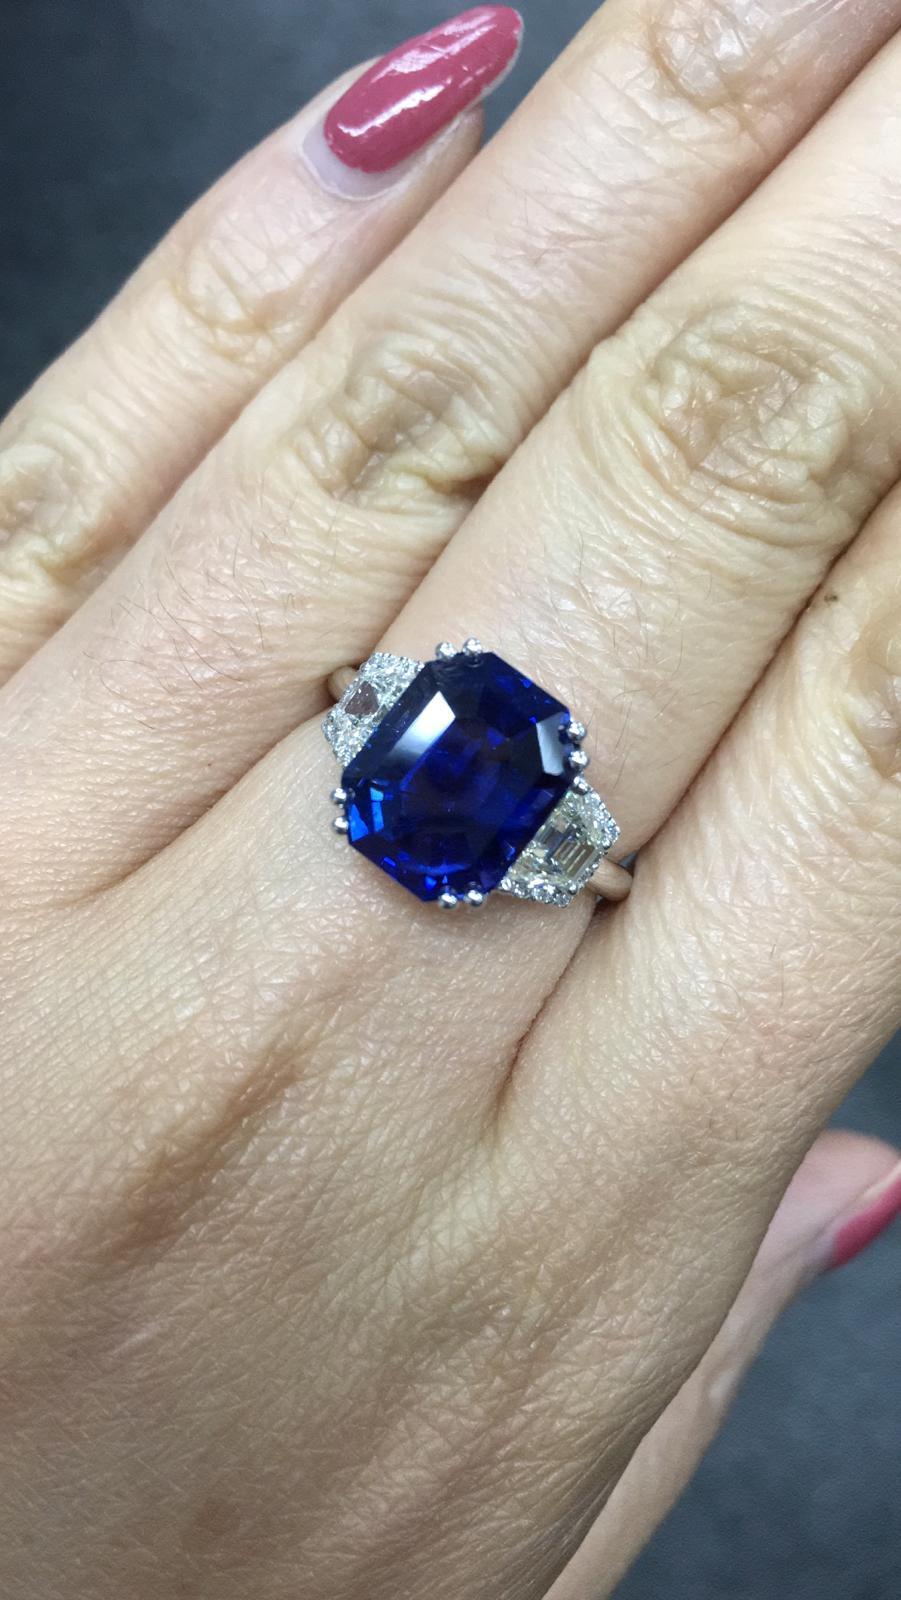 Primary Stone: Sapphire ( Sri Lanka ) Royal Blue 
Shape : Octagonal Cut
Sapphire Weight: 7.05 Carats 
Measurements Sapphire: 11.10mm x 8.80mm x 7.52mm
Color: Royal Blue
Accent Stones: Genuine Diamond
Shape Or Cut Diamond: 2 Baguettes
Average